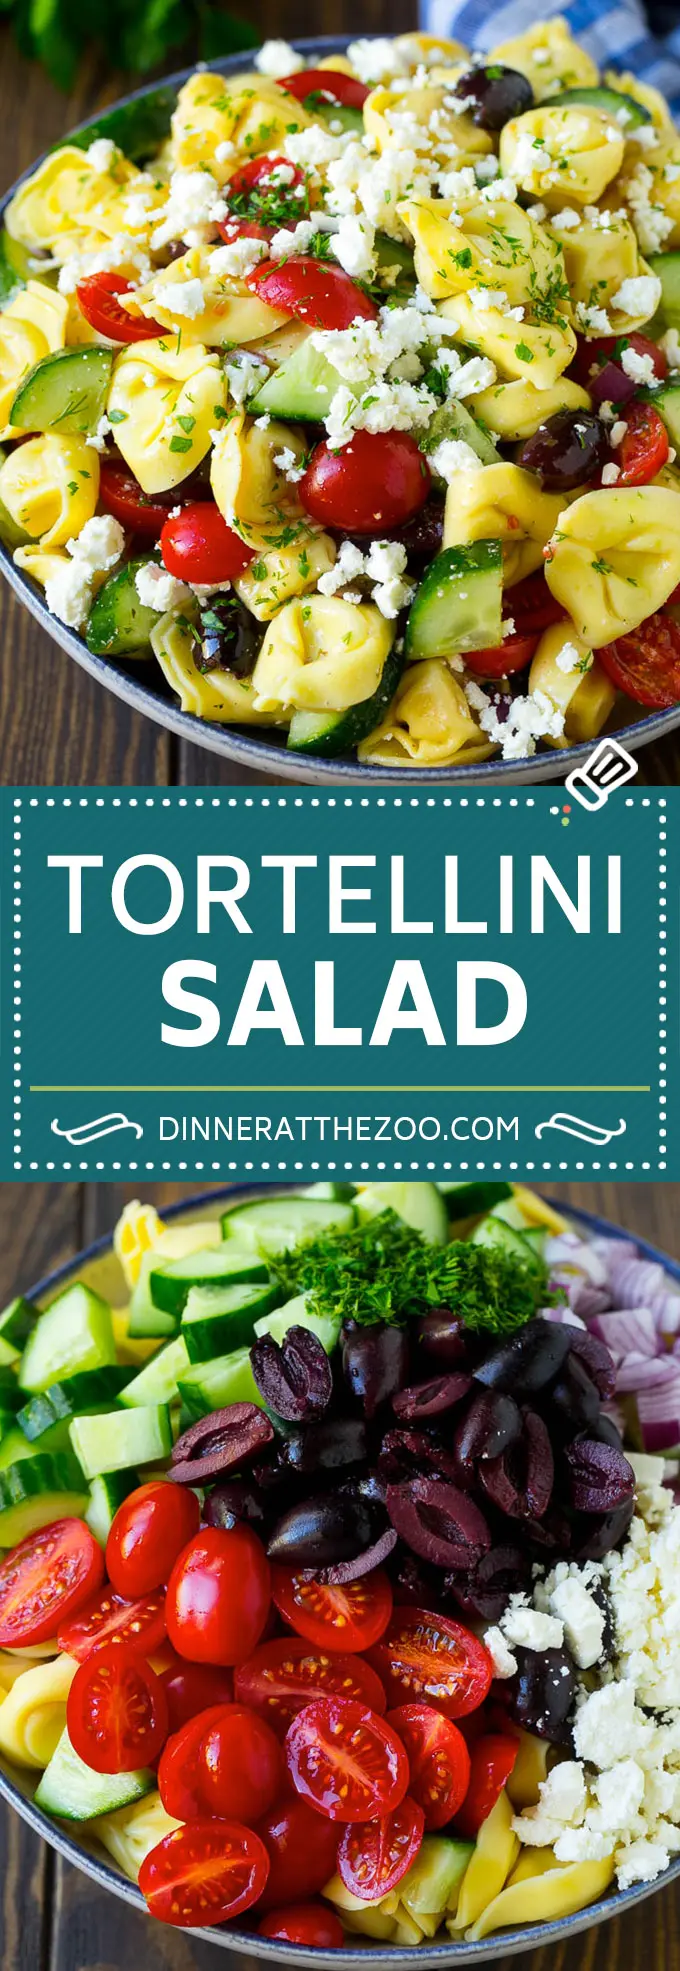 Salada Grega de Tortellini Receita | Salada de Tortellini | Salada Grega de Tortellini | Salada Grega #grego #tortellini #pasta #salada #cucumbers #olives #dinneratthezoo